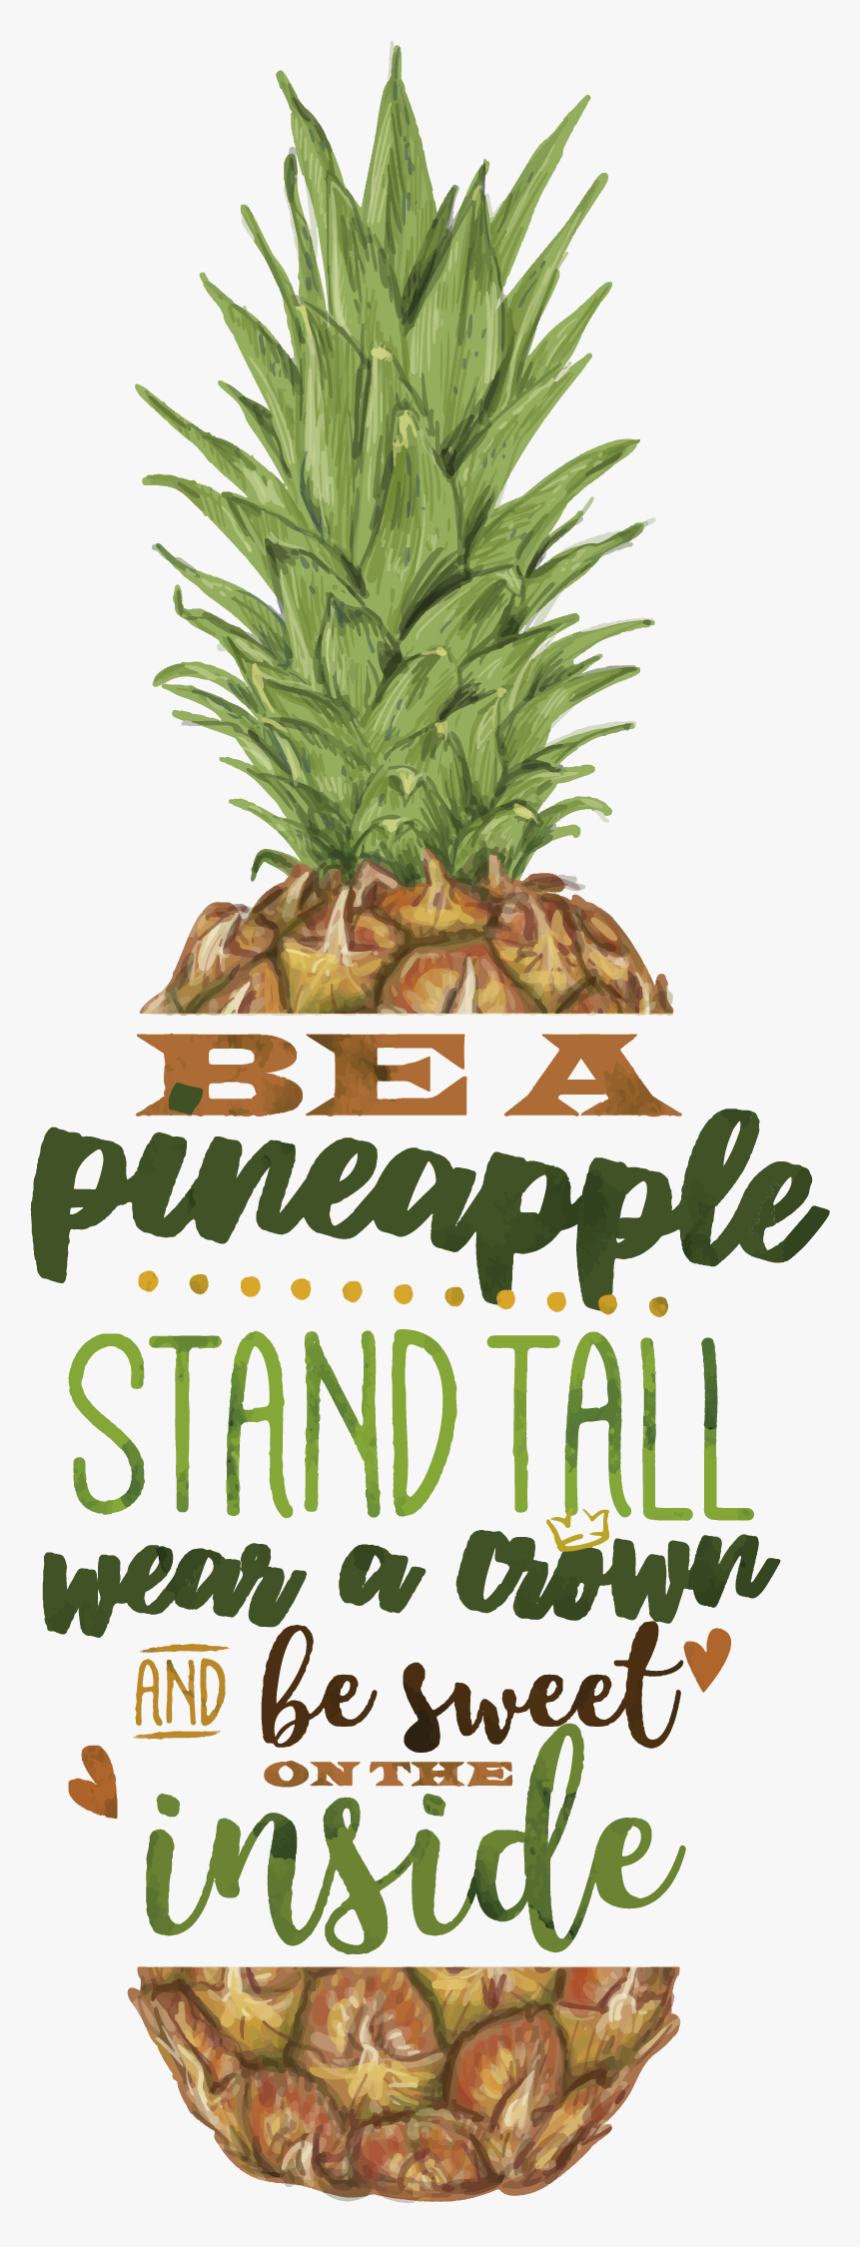 Transparent Pineapple Emoji Png - Poster, Png Download, Free Download